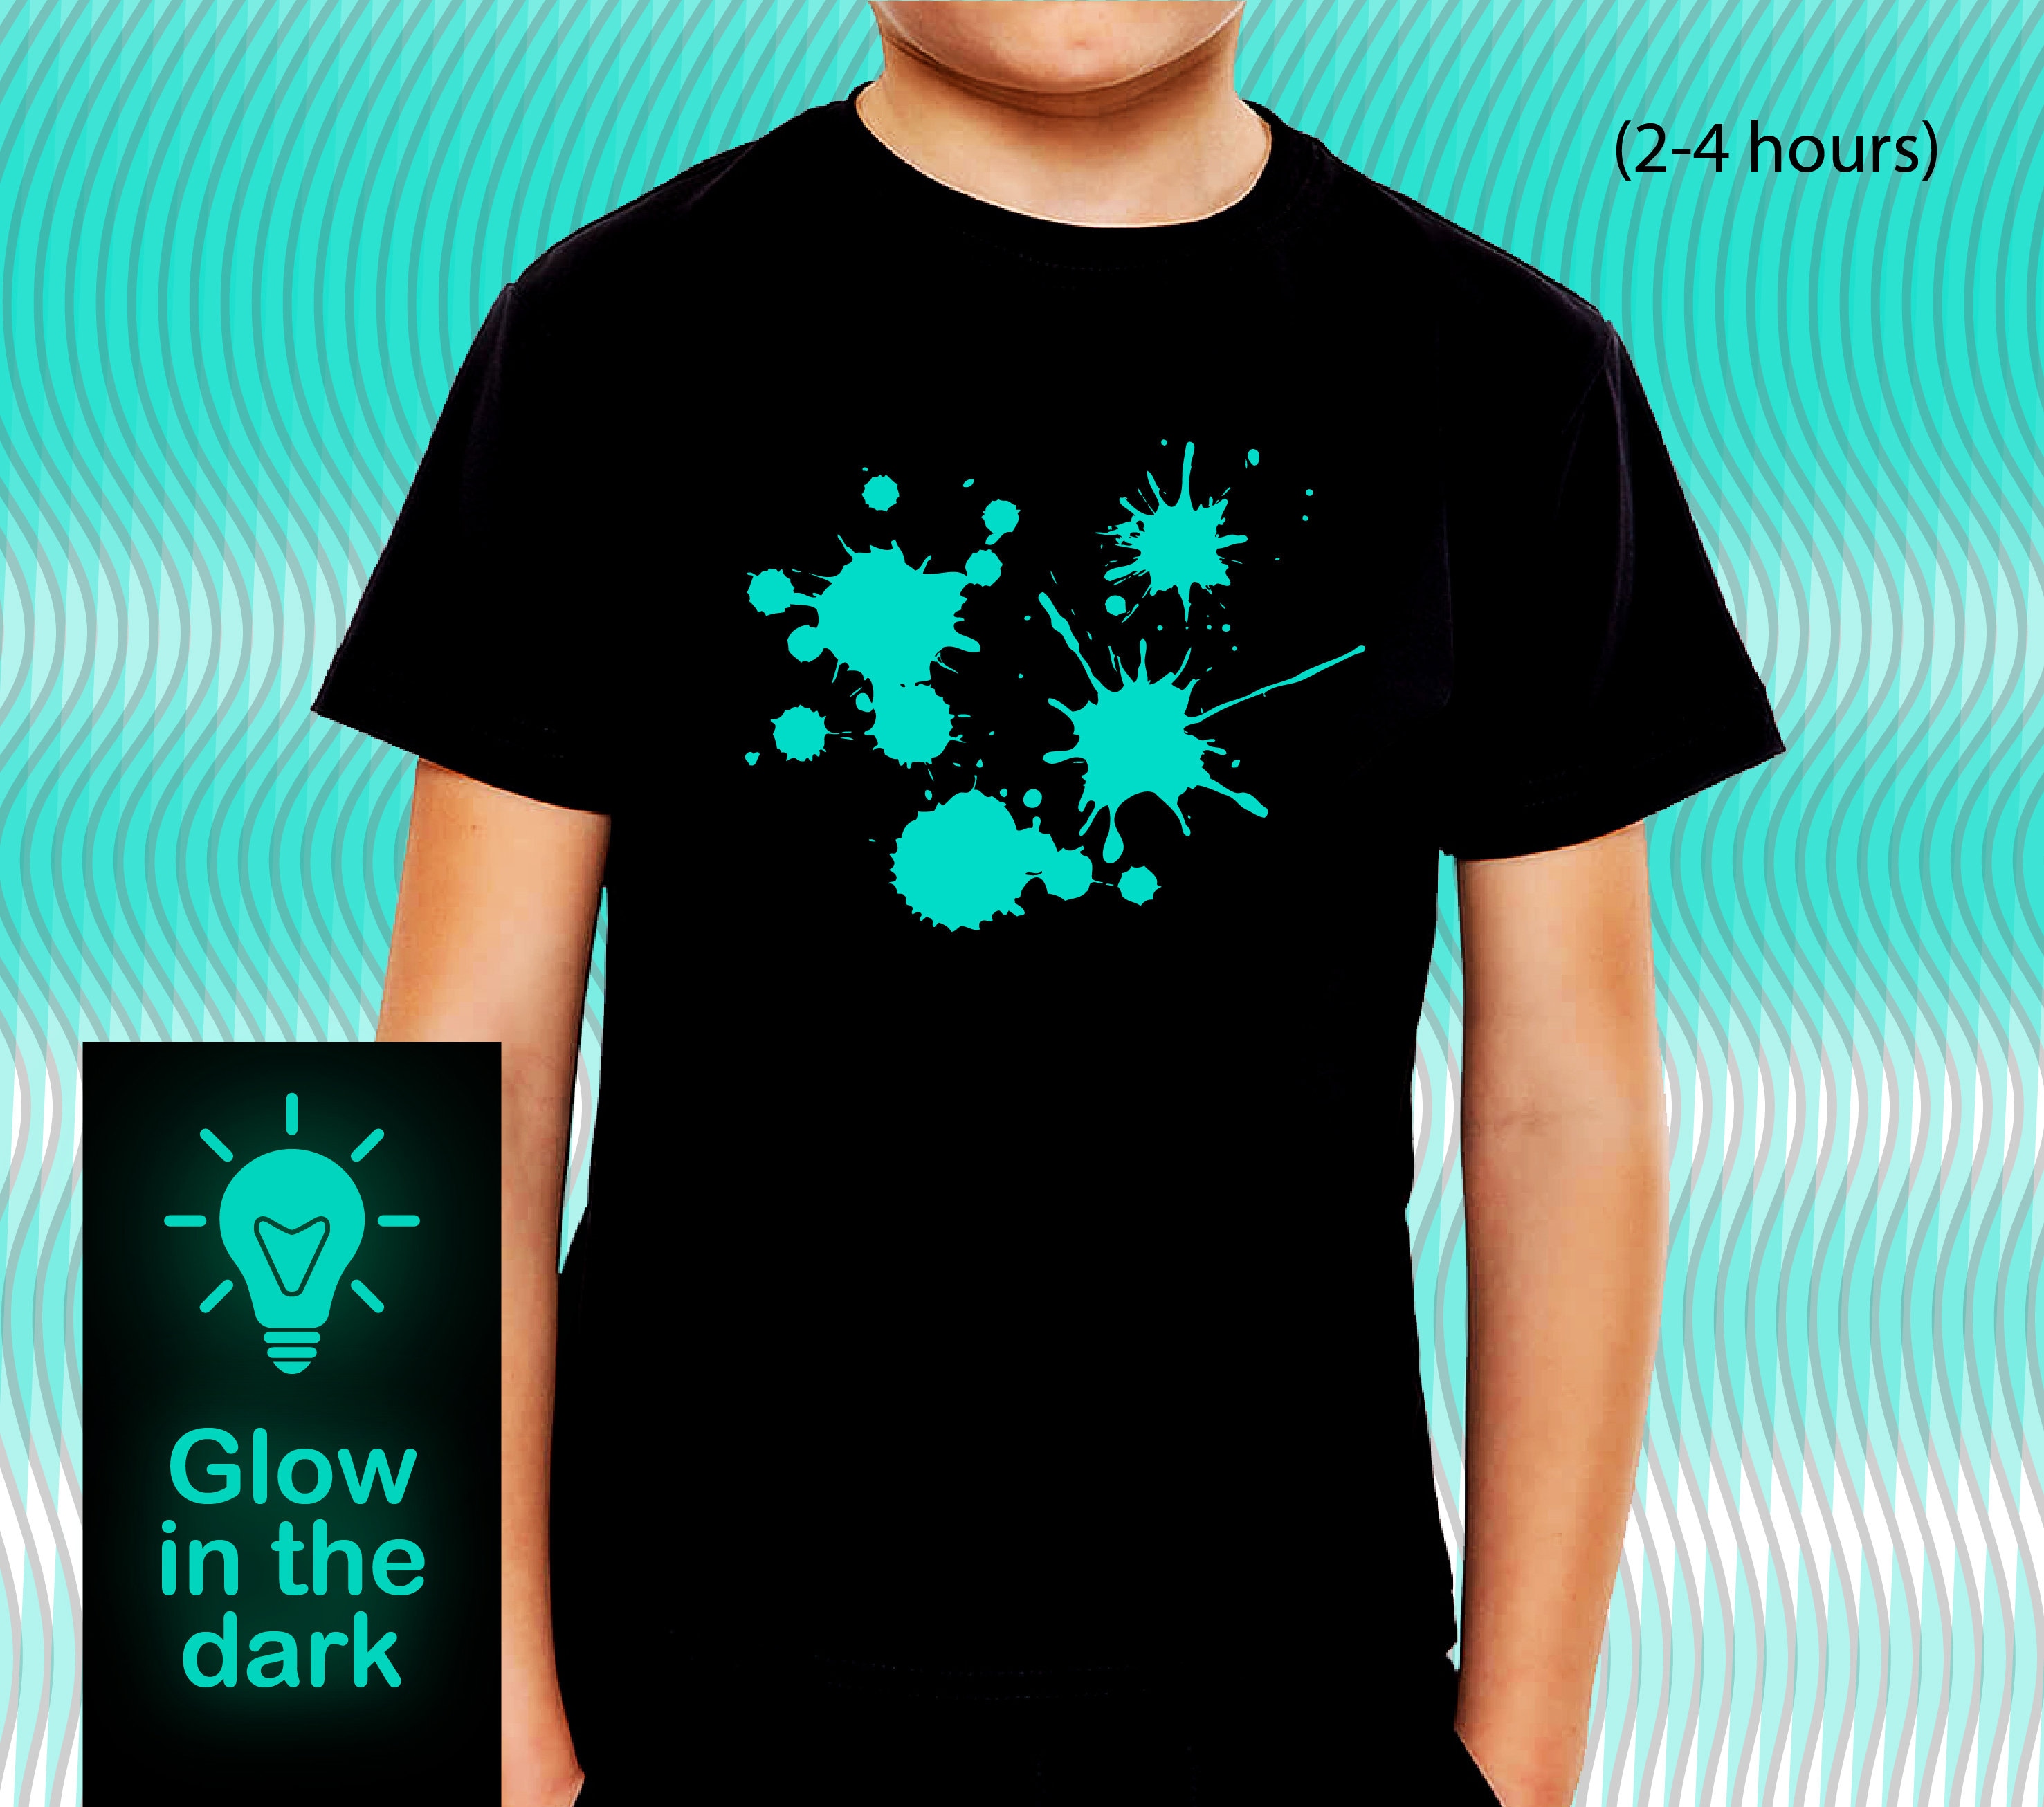 Paint Splatters T-shirt / Glow-in-the-dark T-shirt /kids 